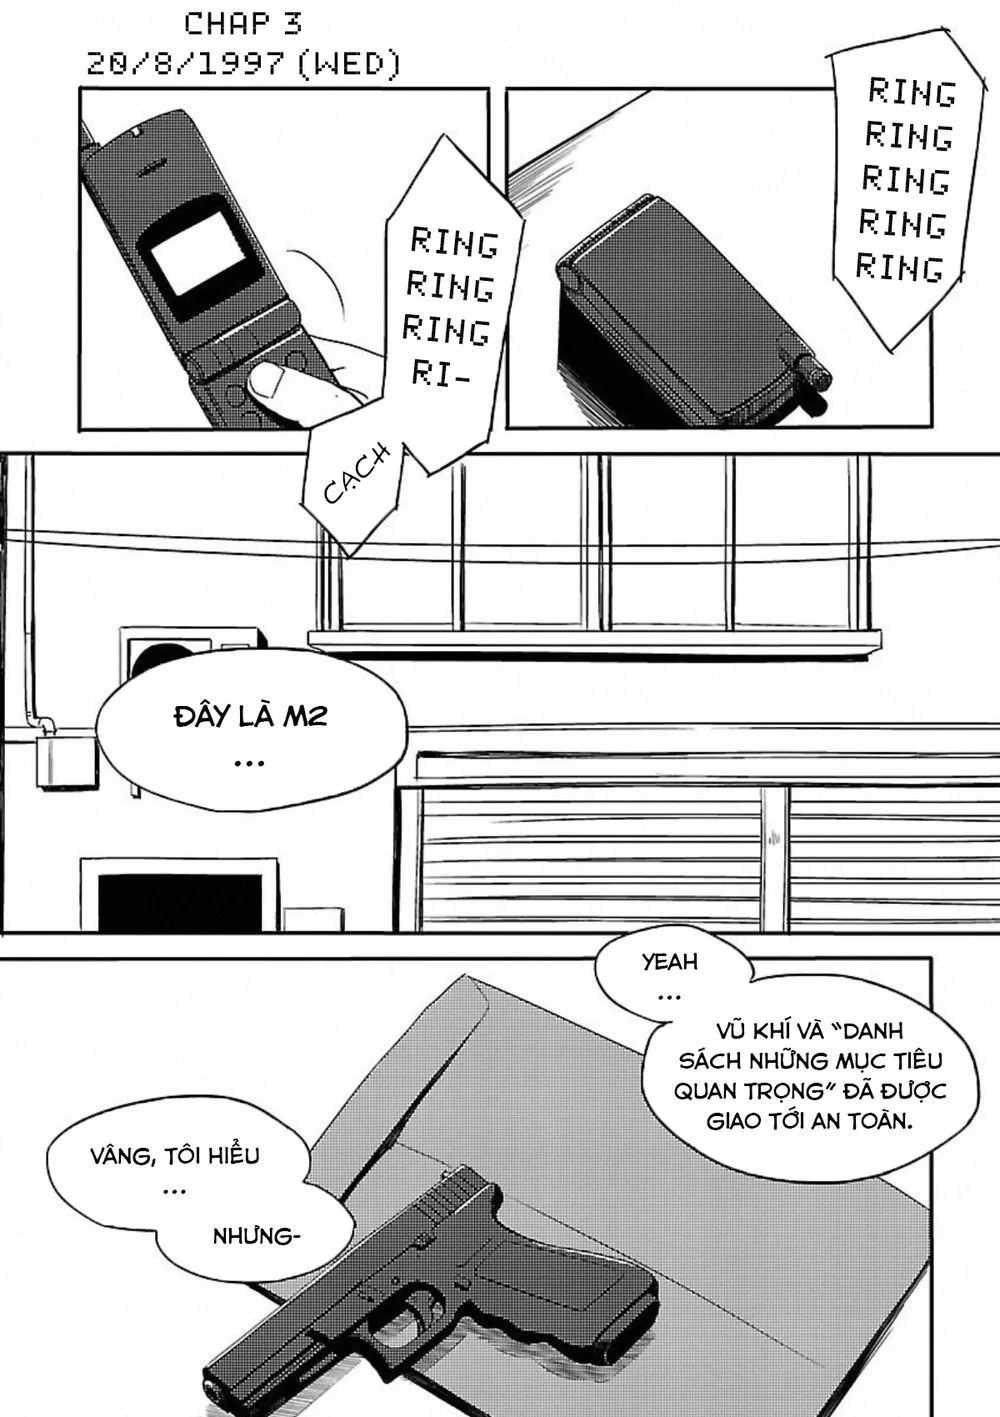 Steins;gate: Eigou Kaiki No Pandora Chương 3 Trang 2